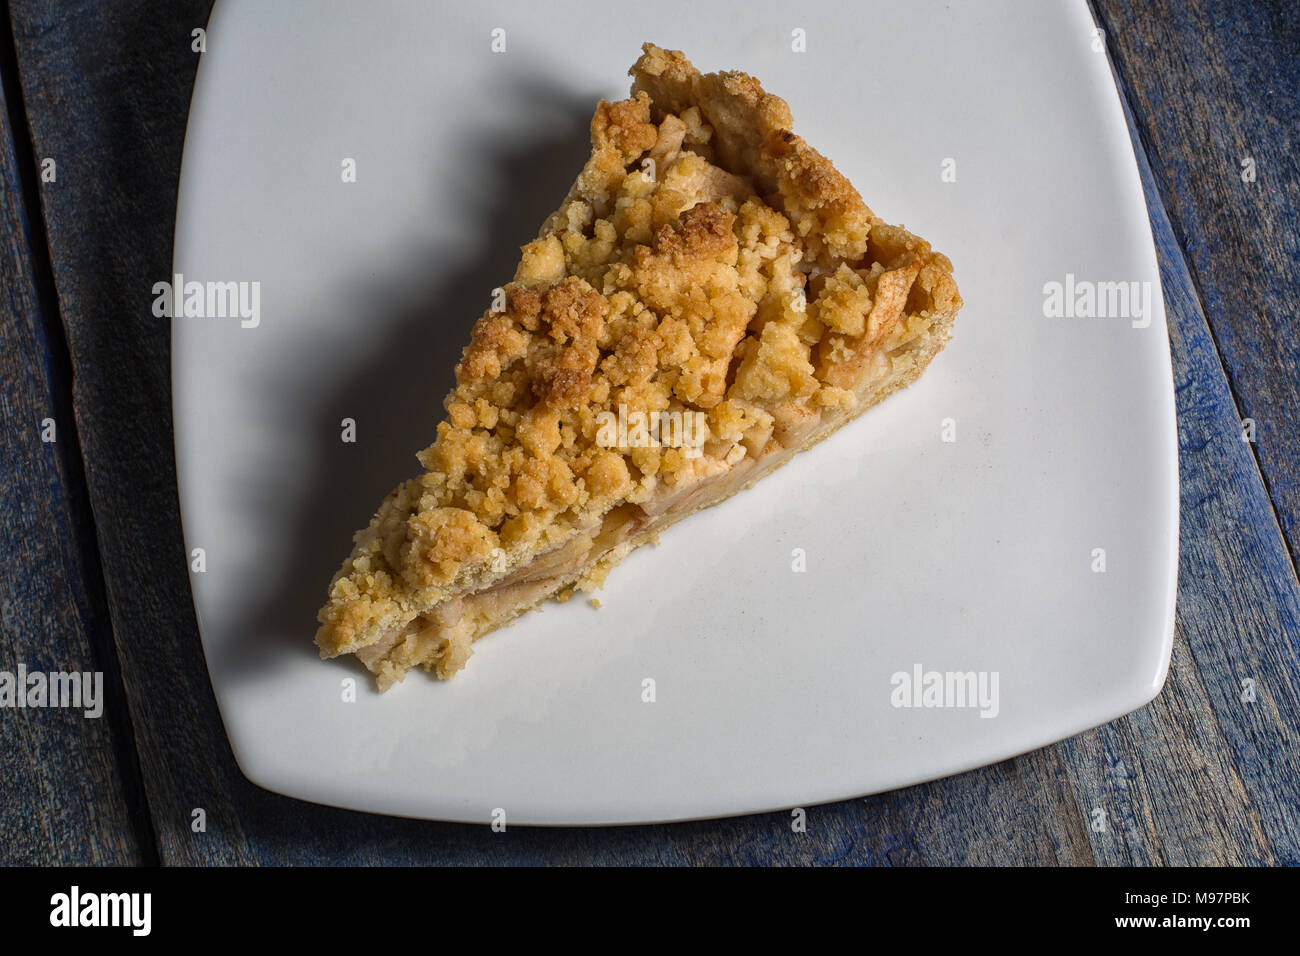 slice of cake on plate Stock Photo